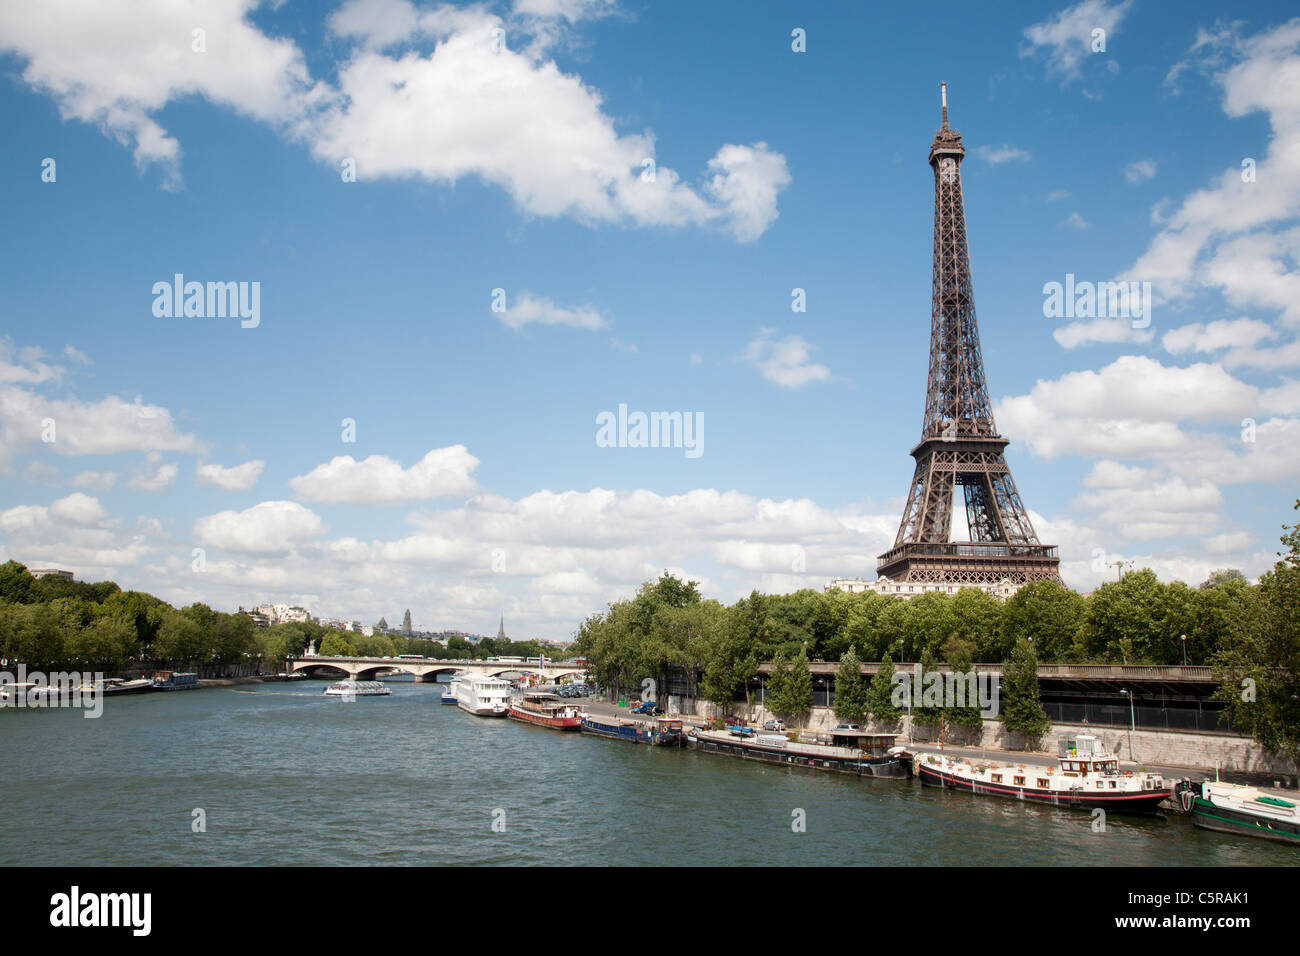 Paris - Eiffel tower from riverside Stock Photo